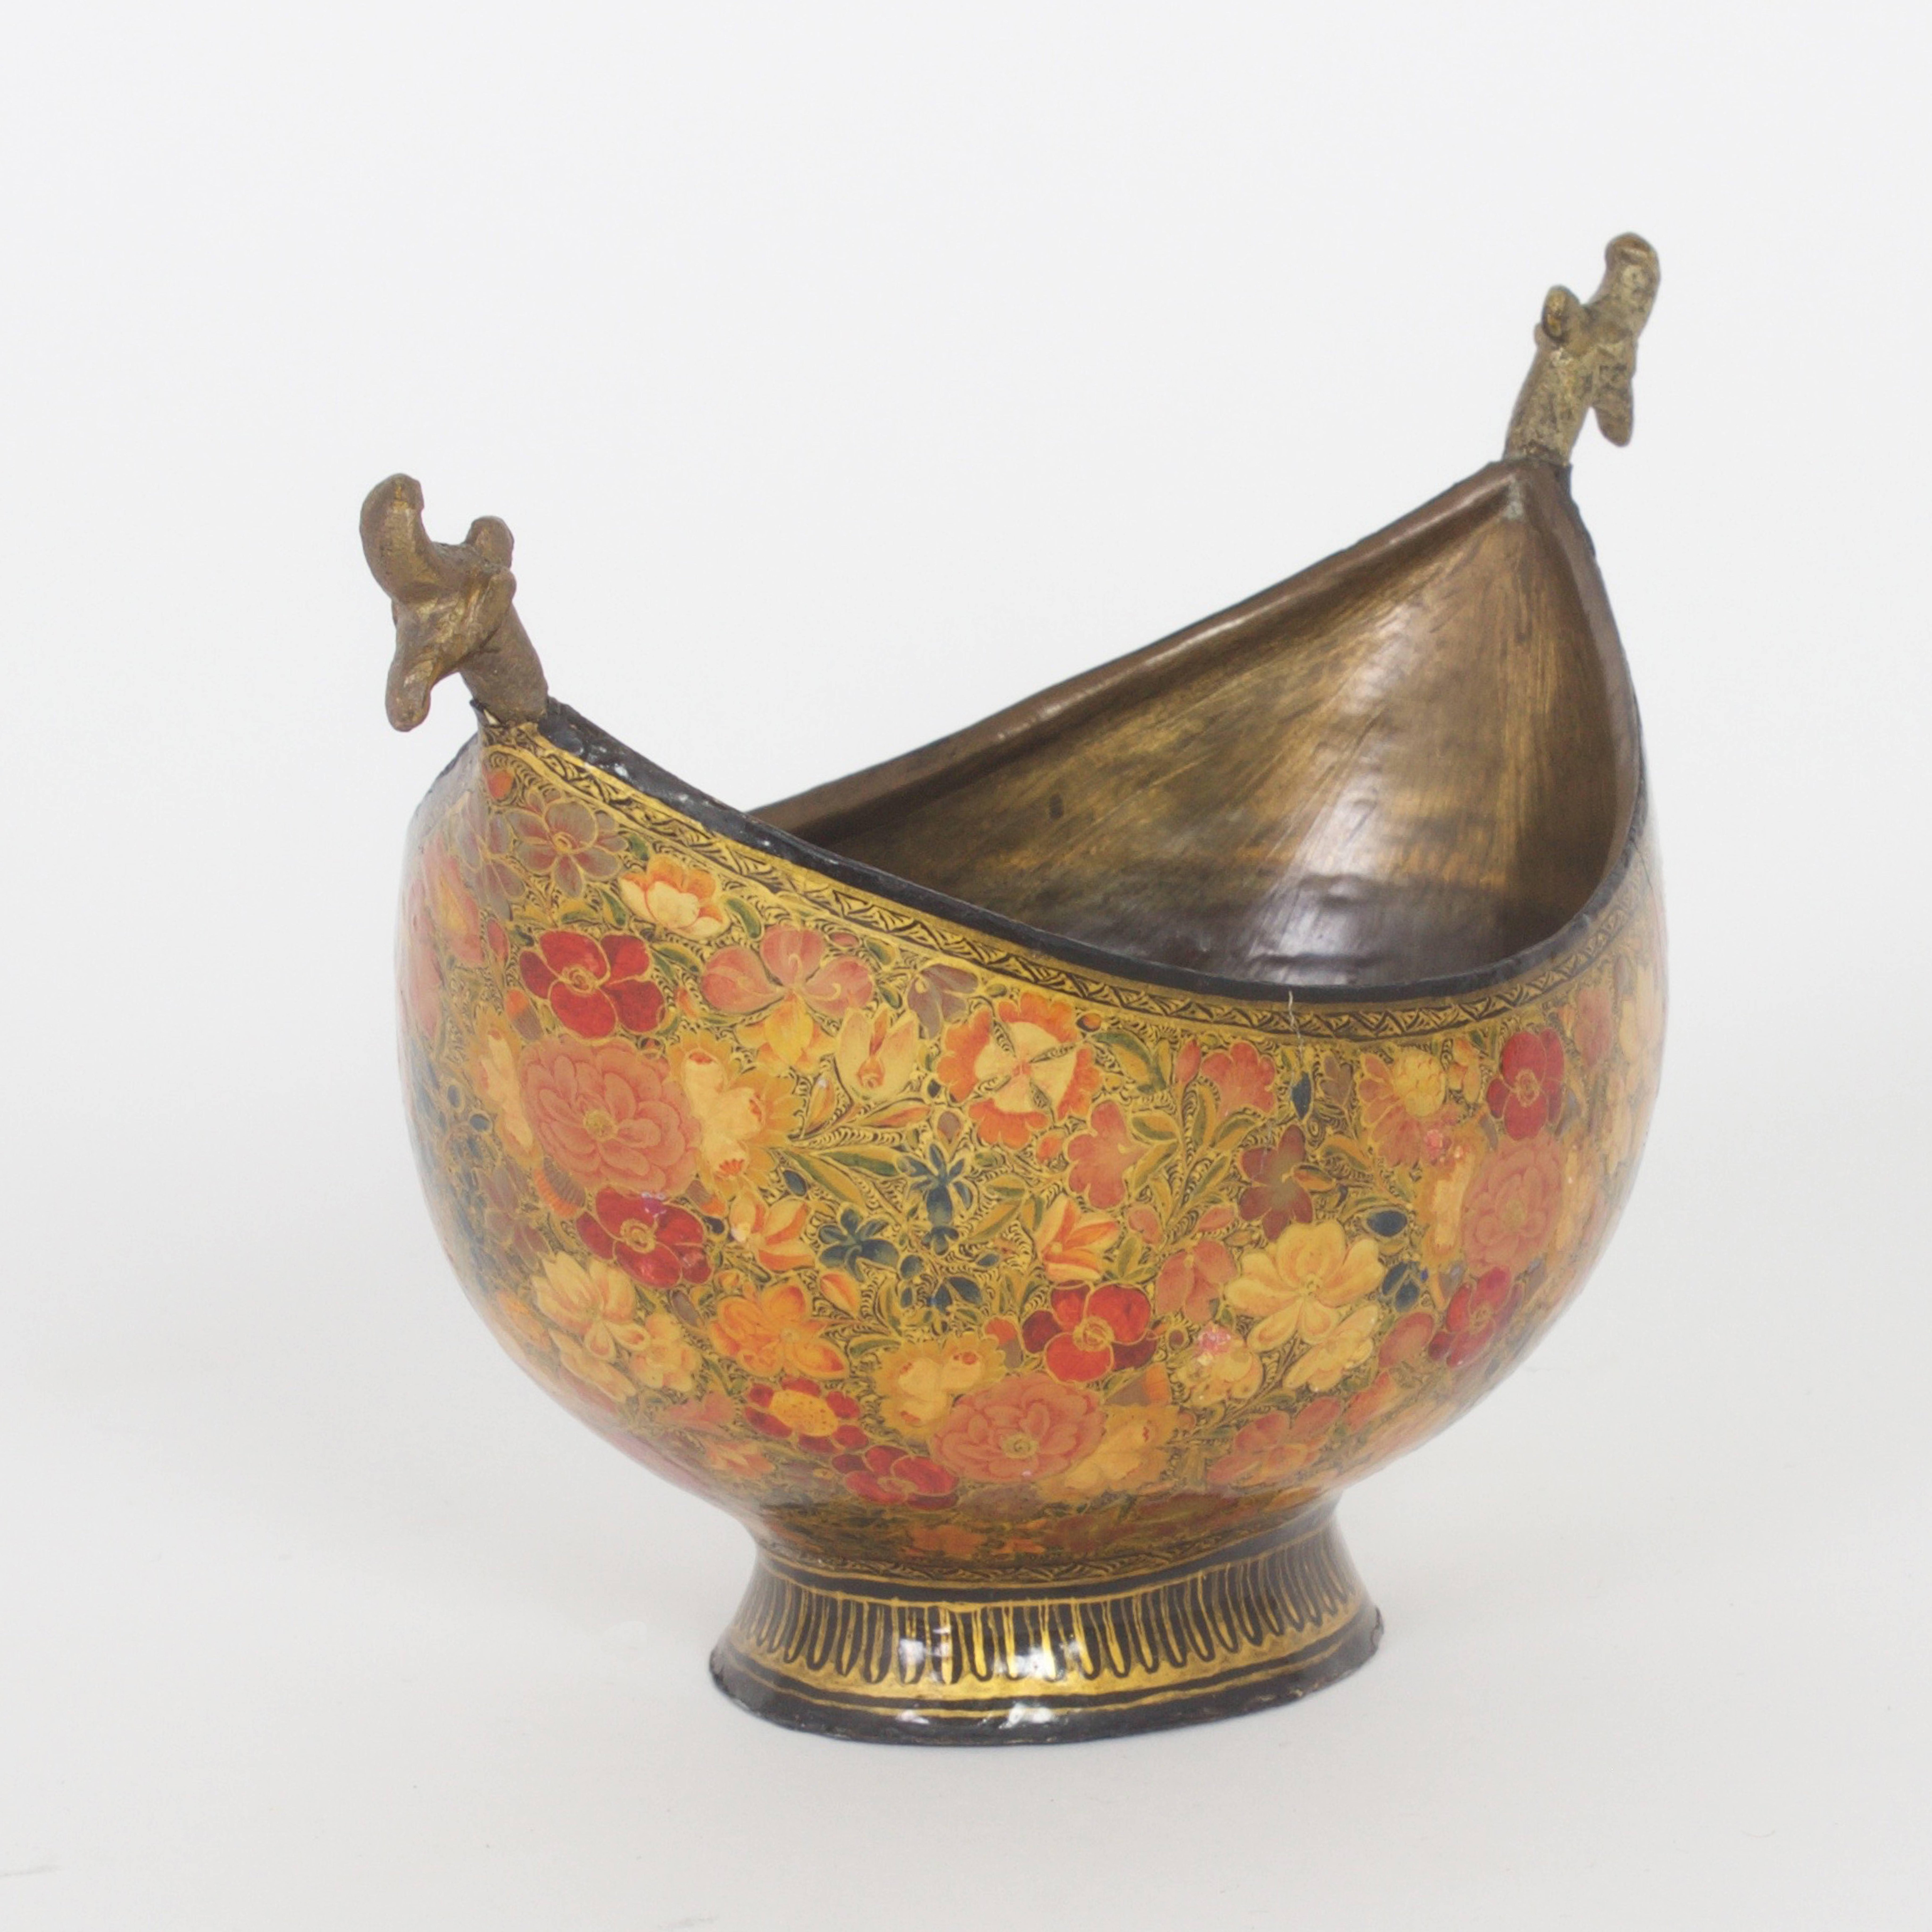 Anglo-Indian Classic Gondola Shaped Kashmiri Bowl with Dragon Handles